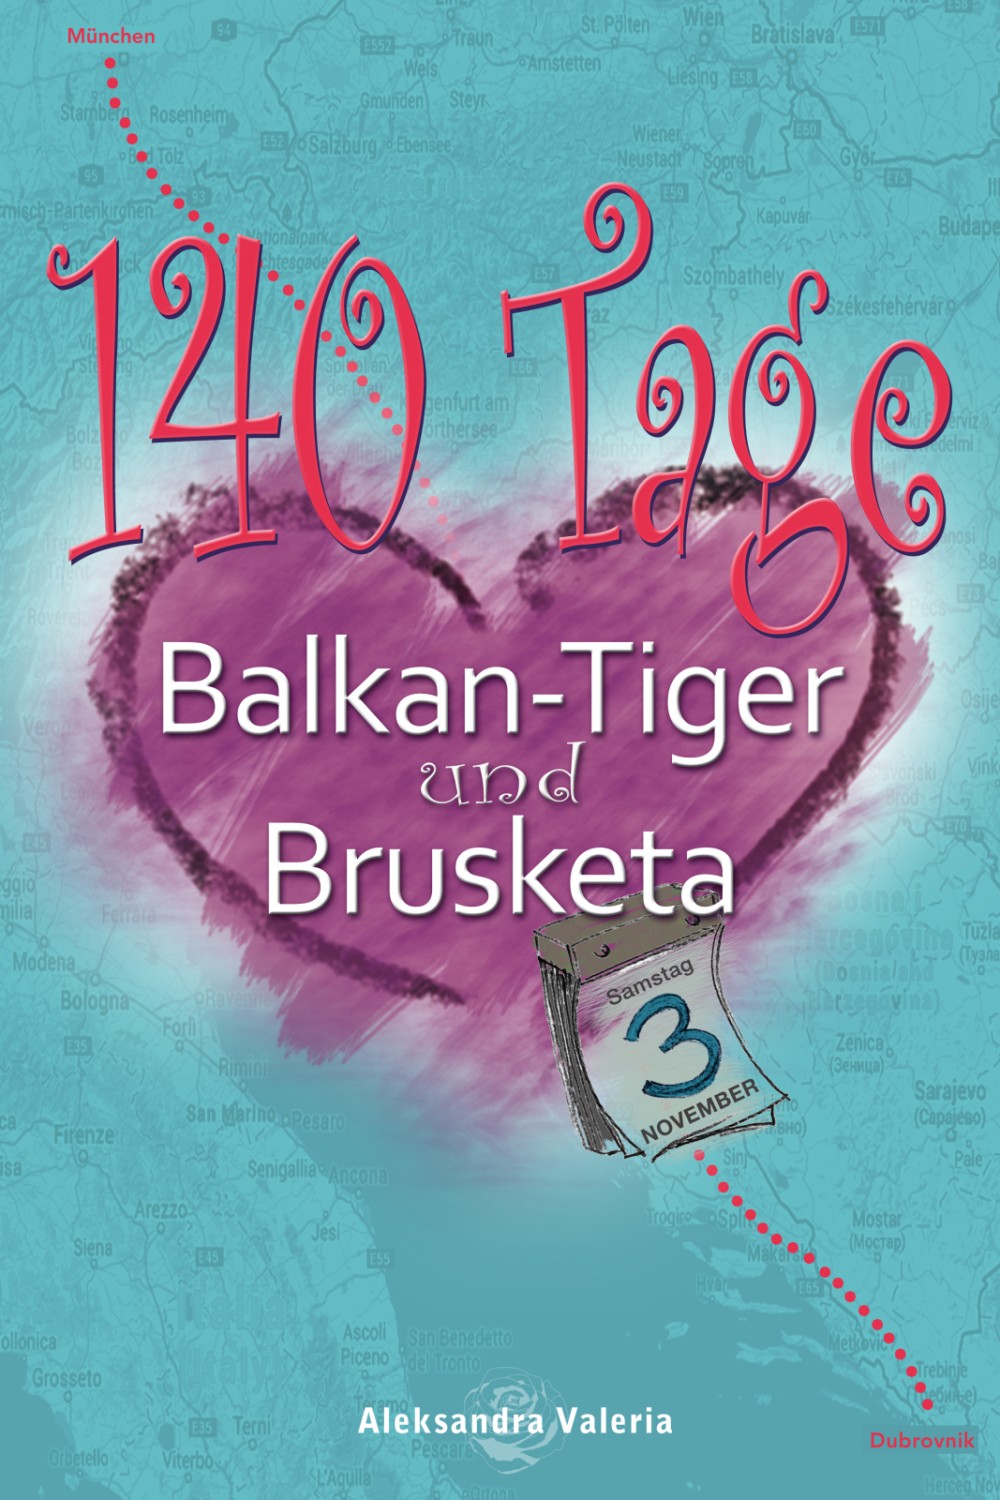 140 Tage - Balkantiger und Brusketa